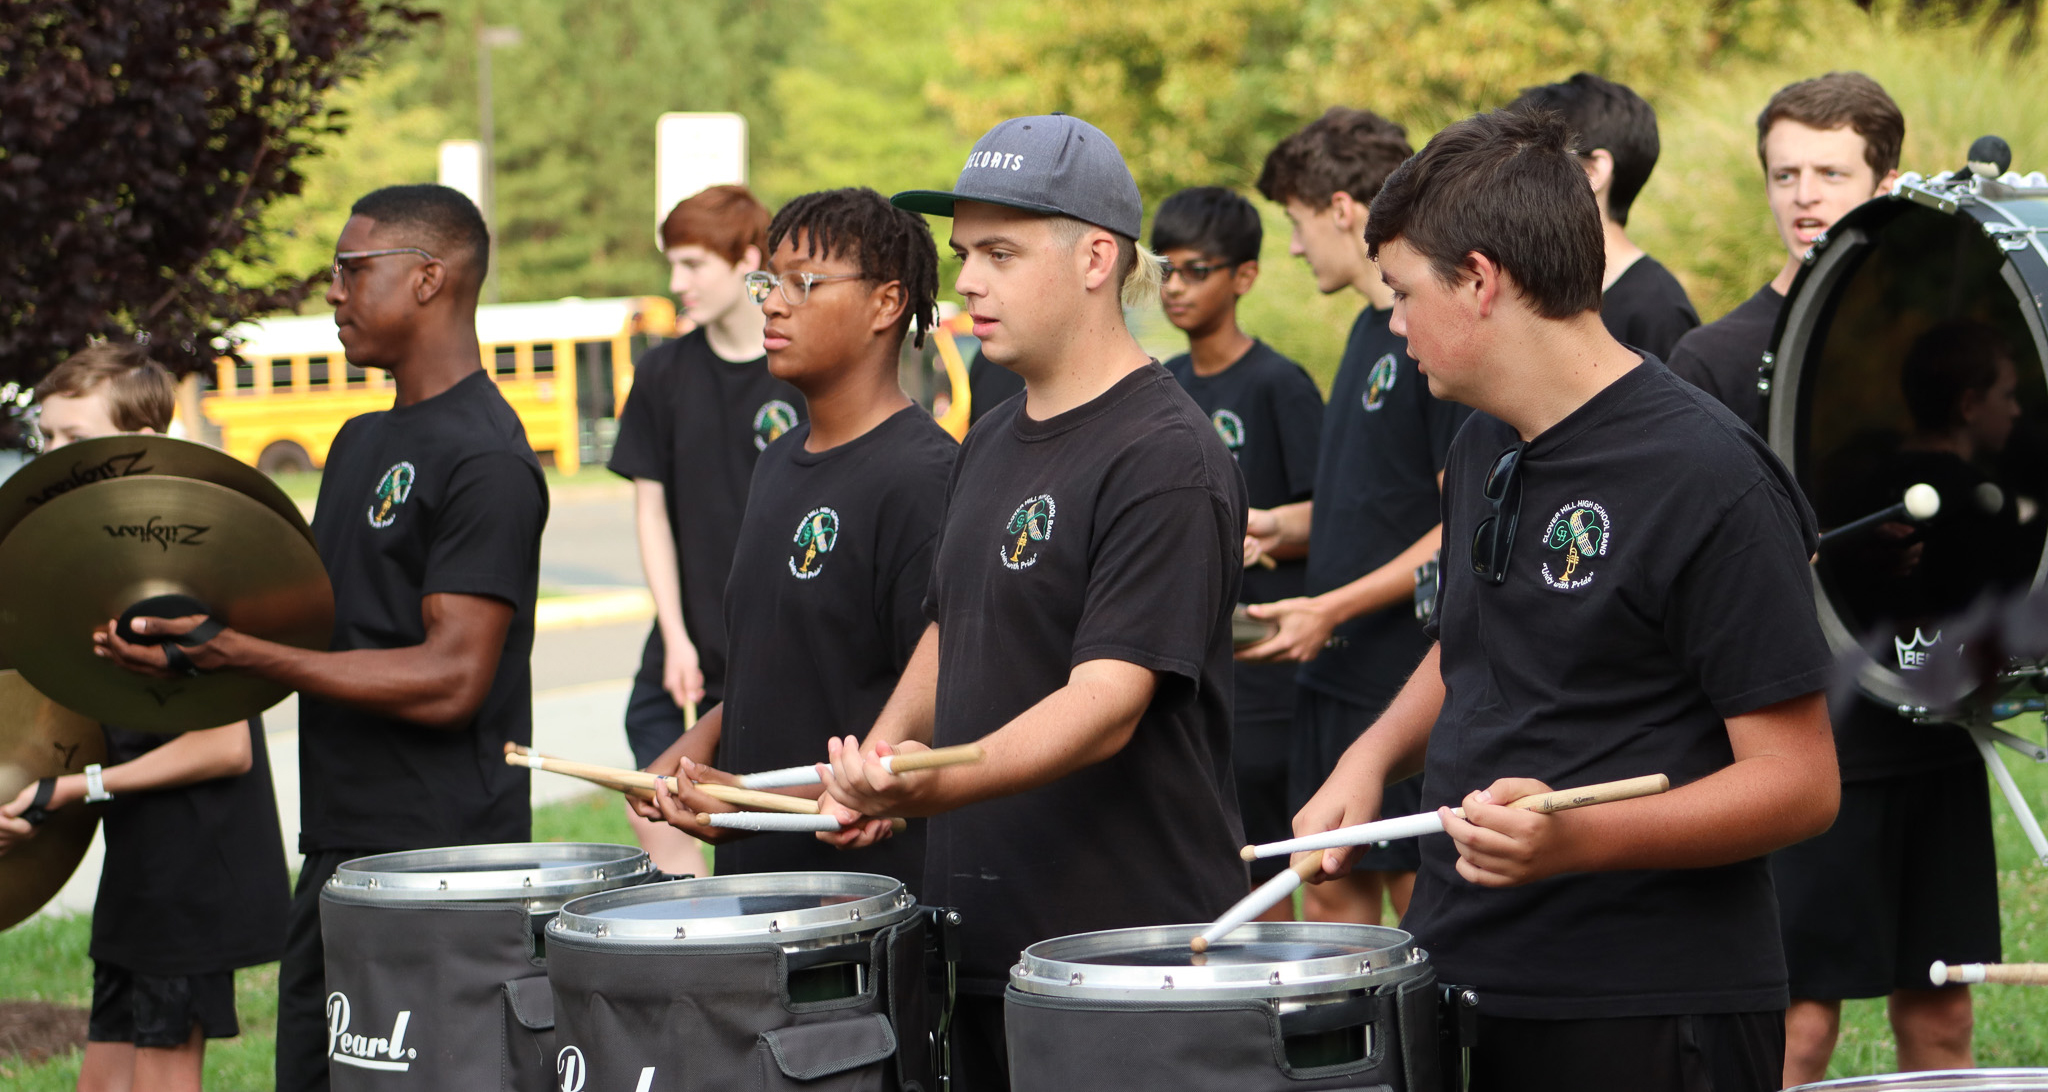 Drumline performing in front of the school